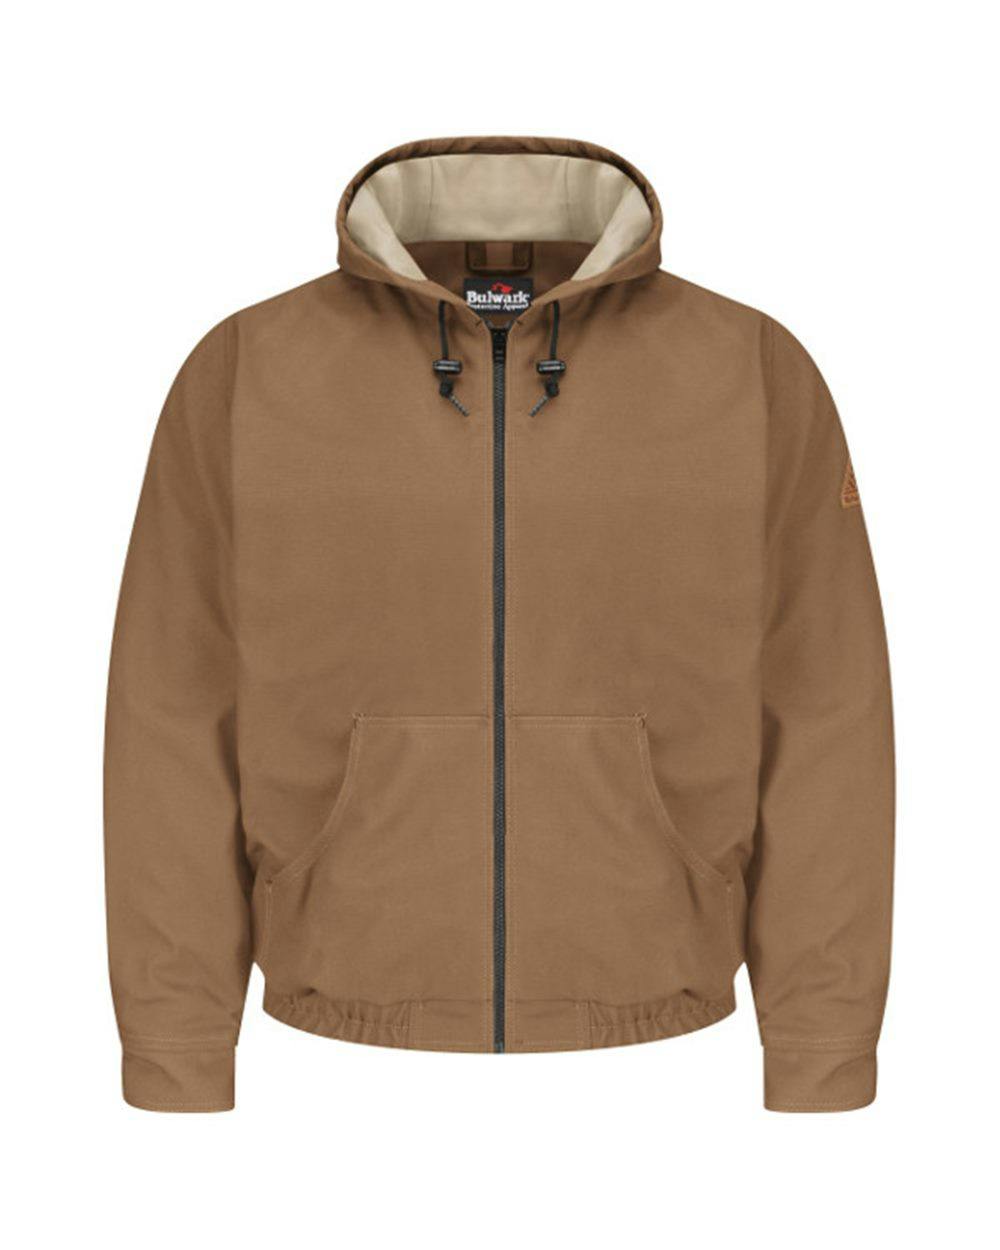 Image for Hooded Jacket - EXCEL FR® ComforTouch - JLH4